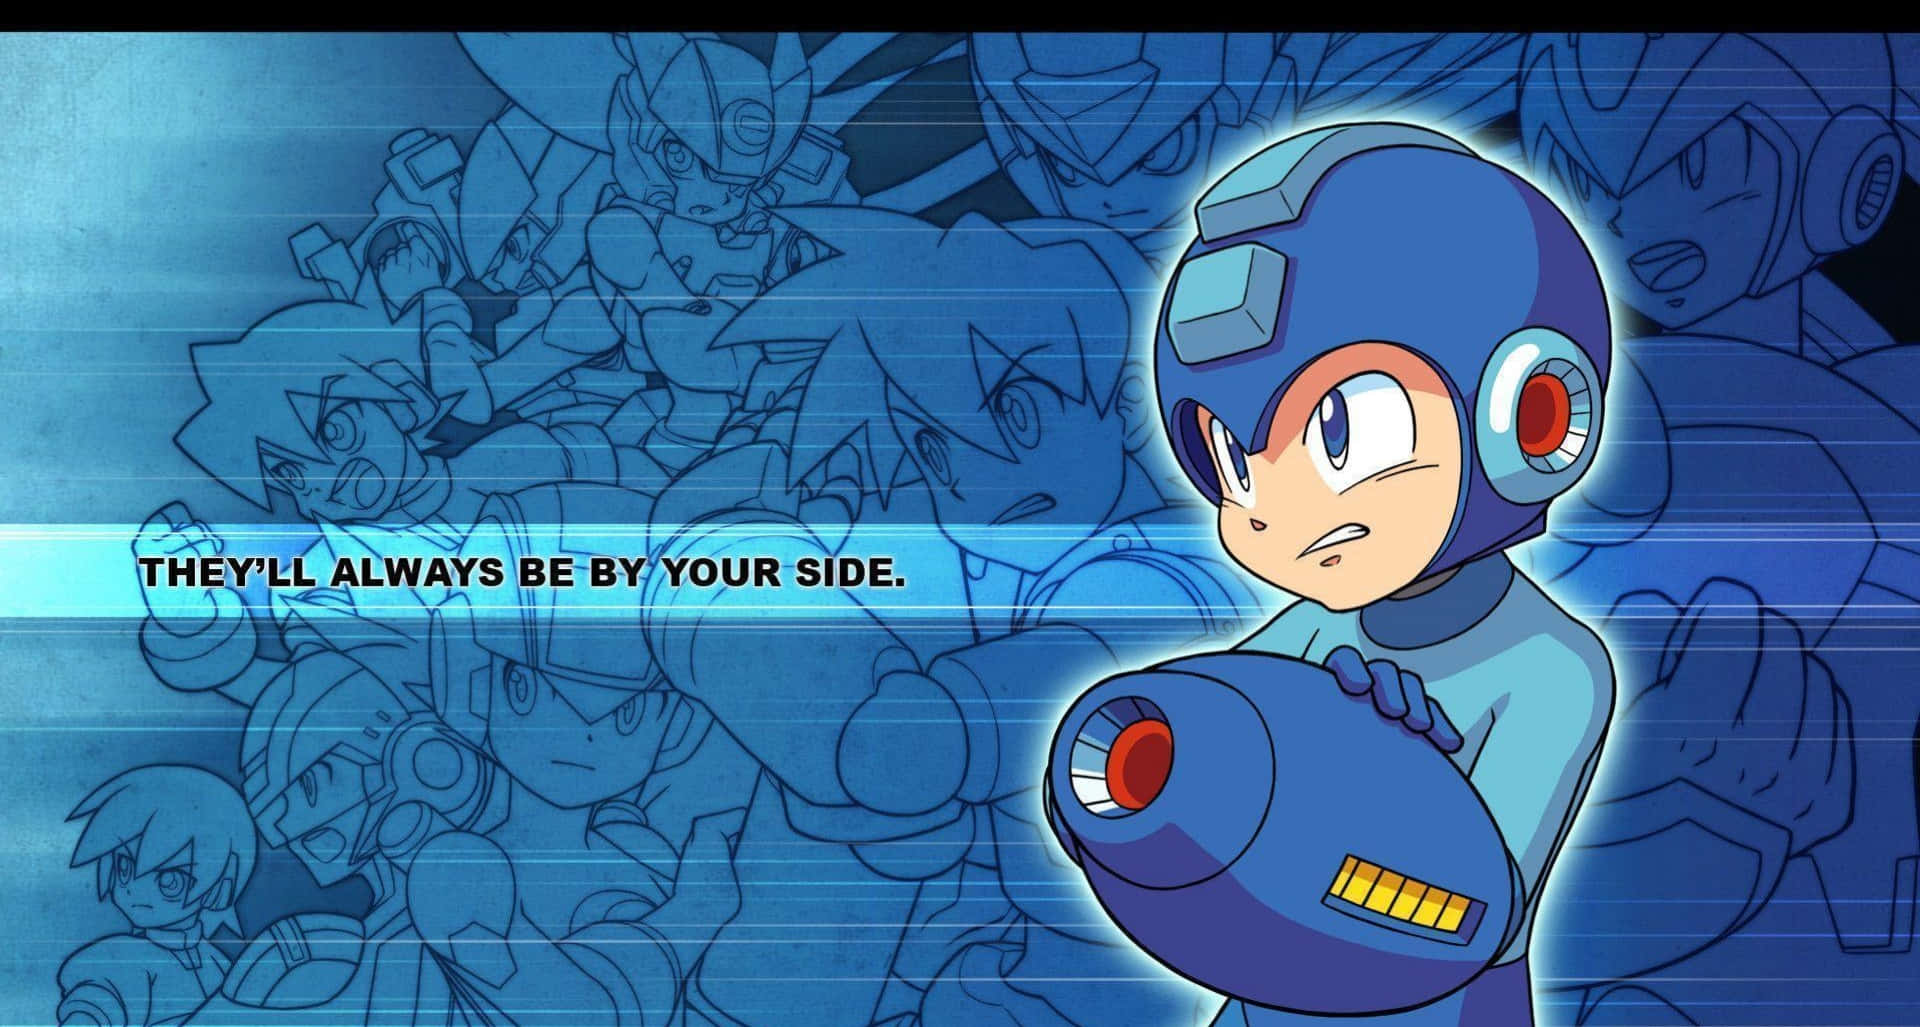 Legendary Video Game Icon Mega Man Wallpaper